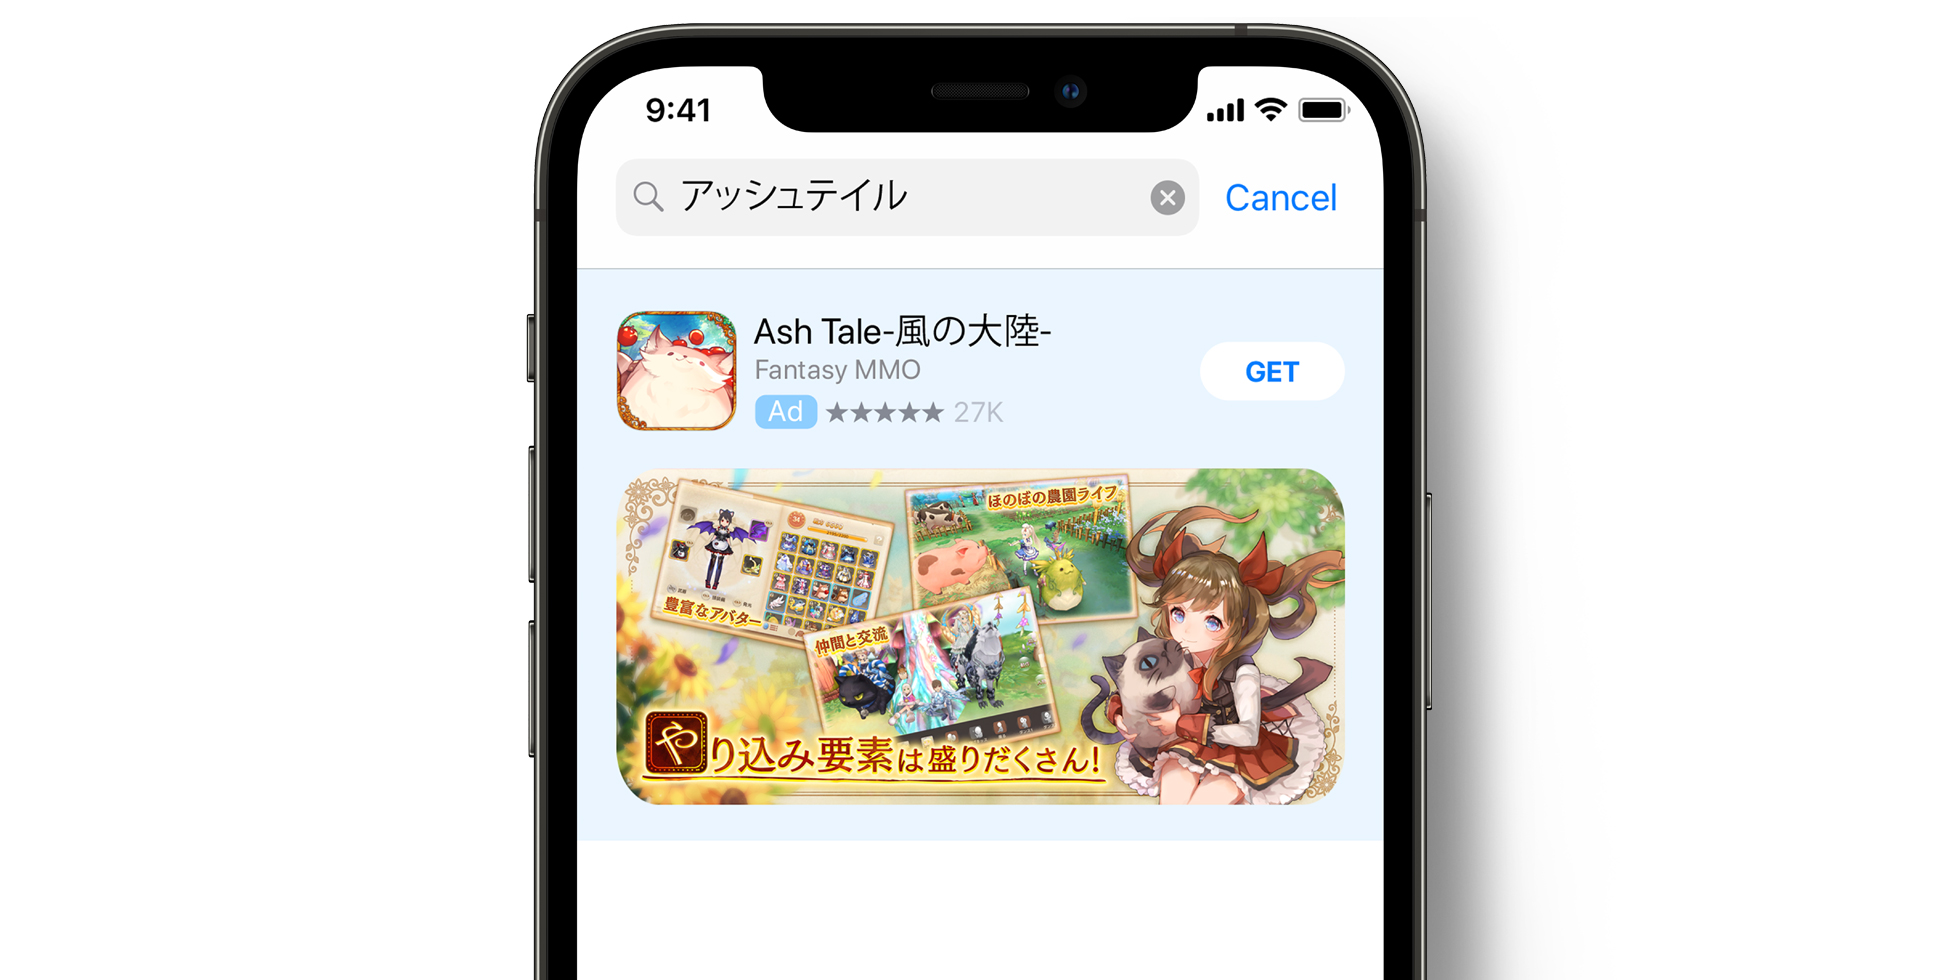 Ash Tale Anzeige im App Store